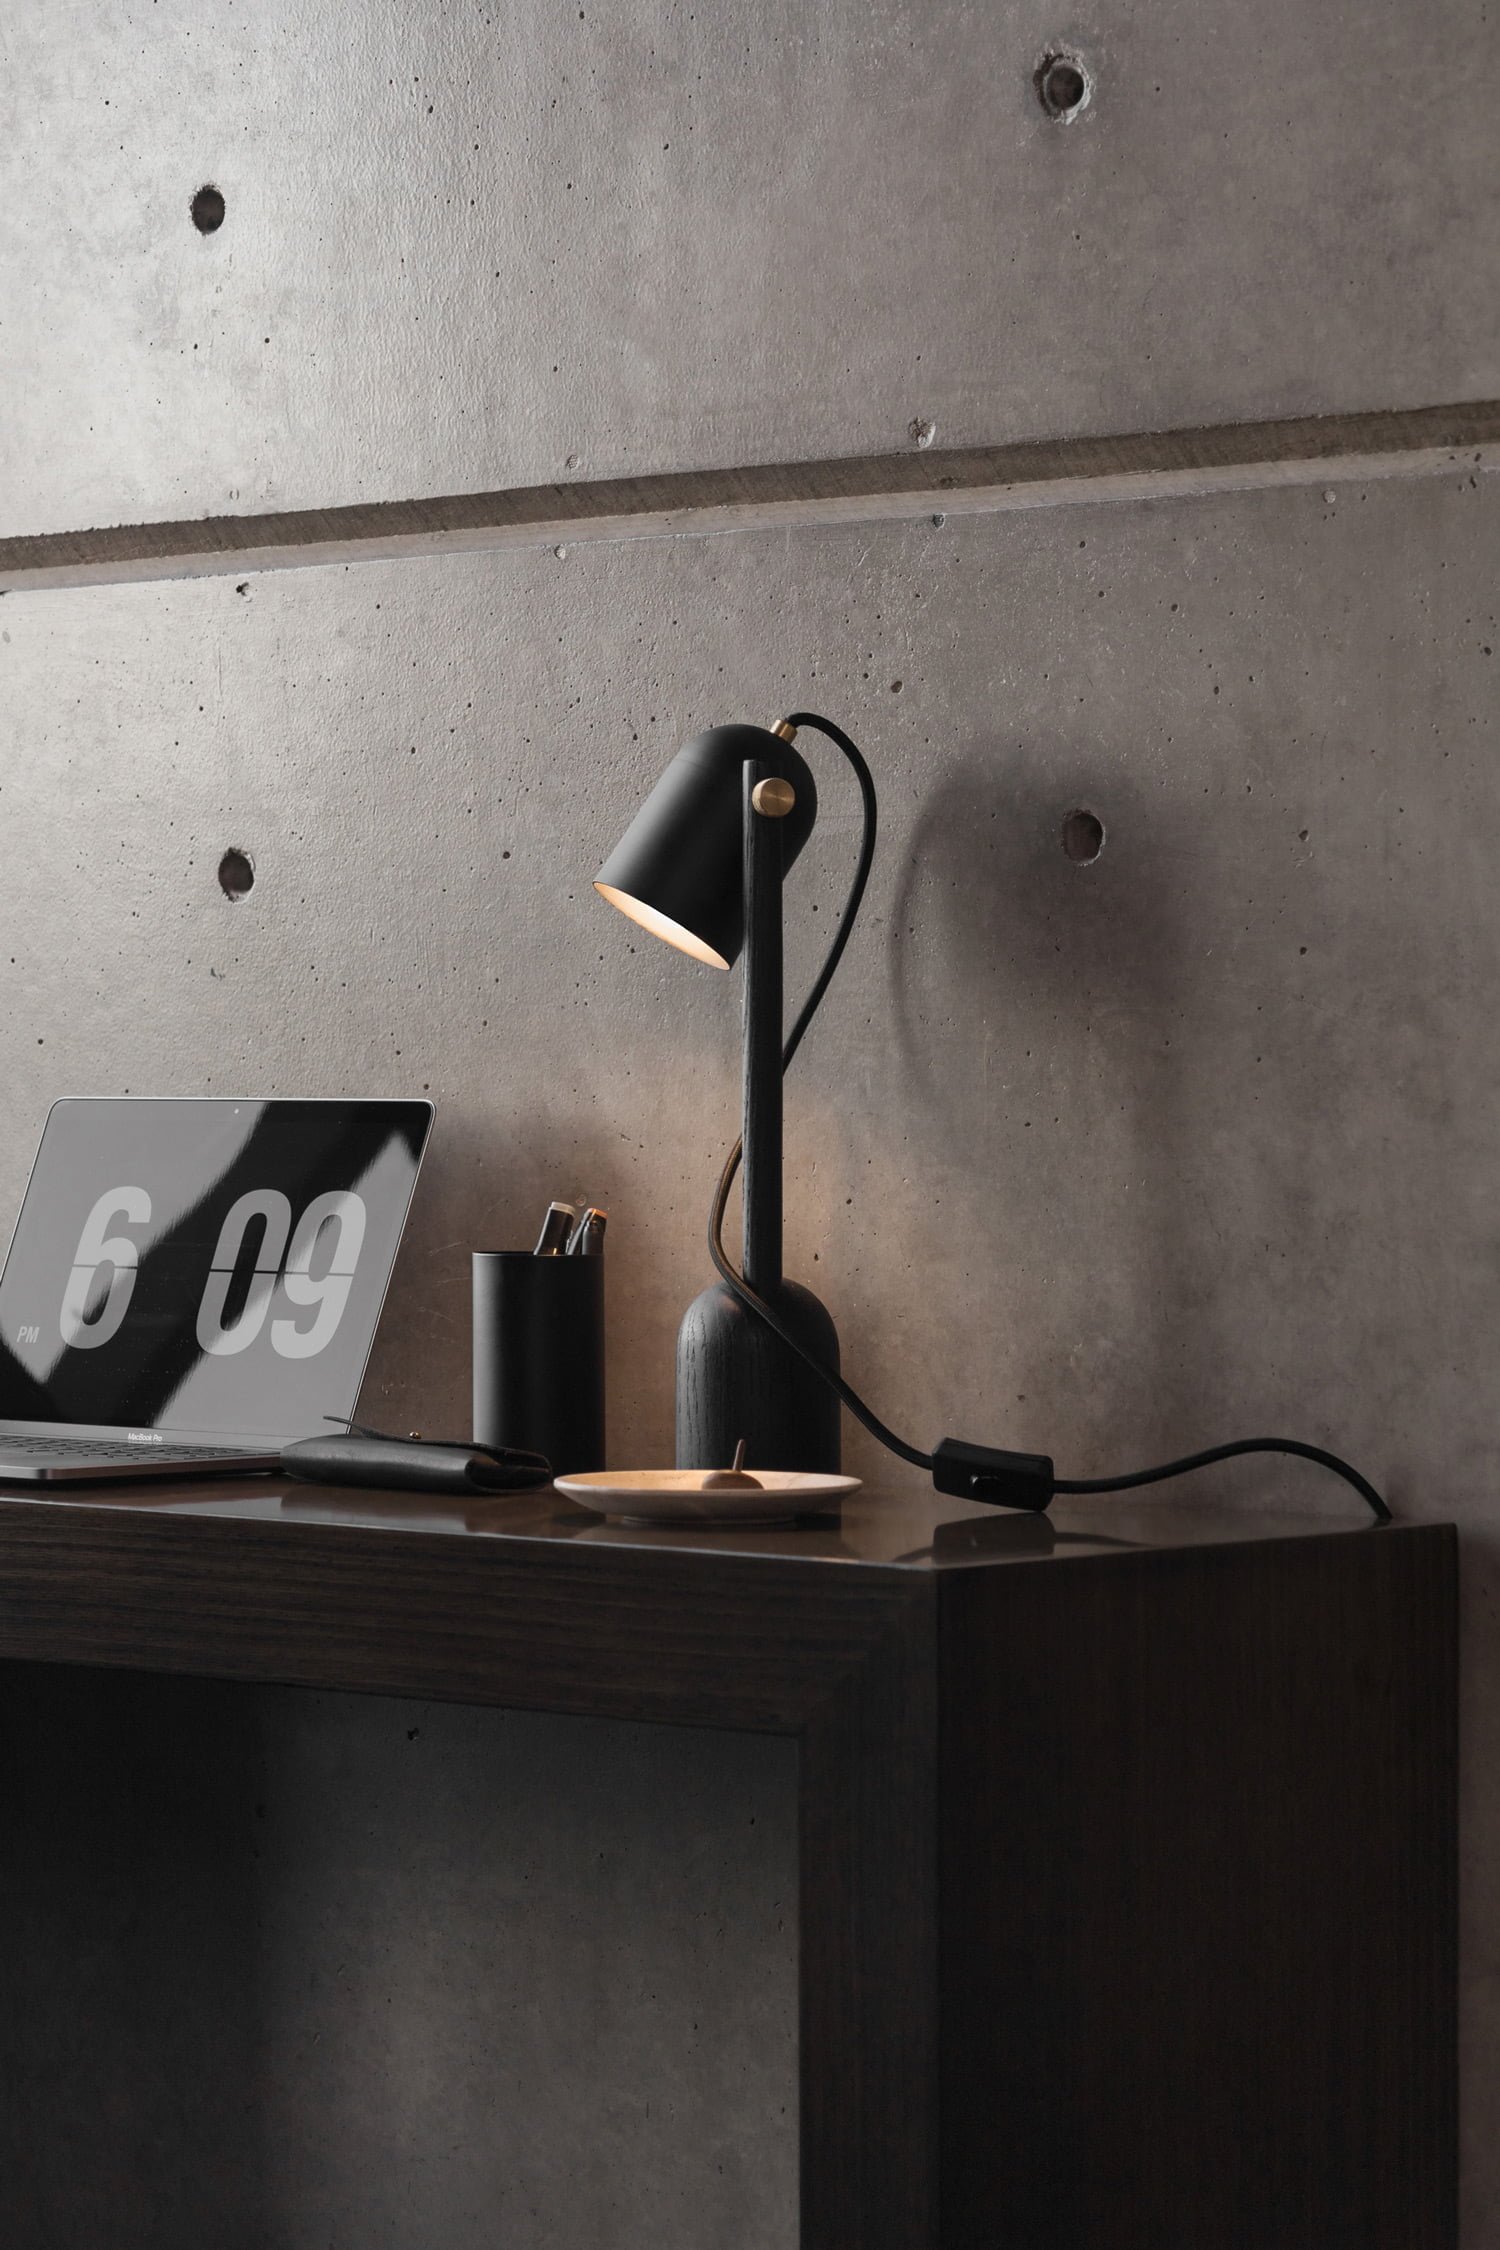 LED desk lamp designed by Bandido Studio